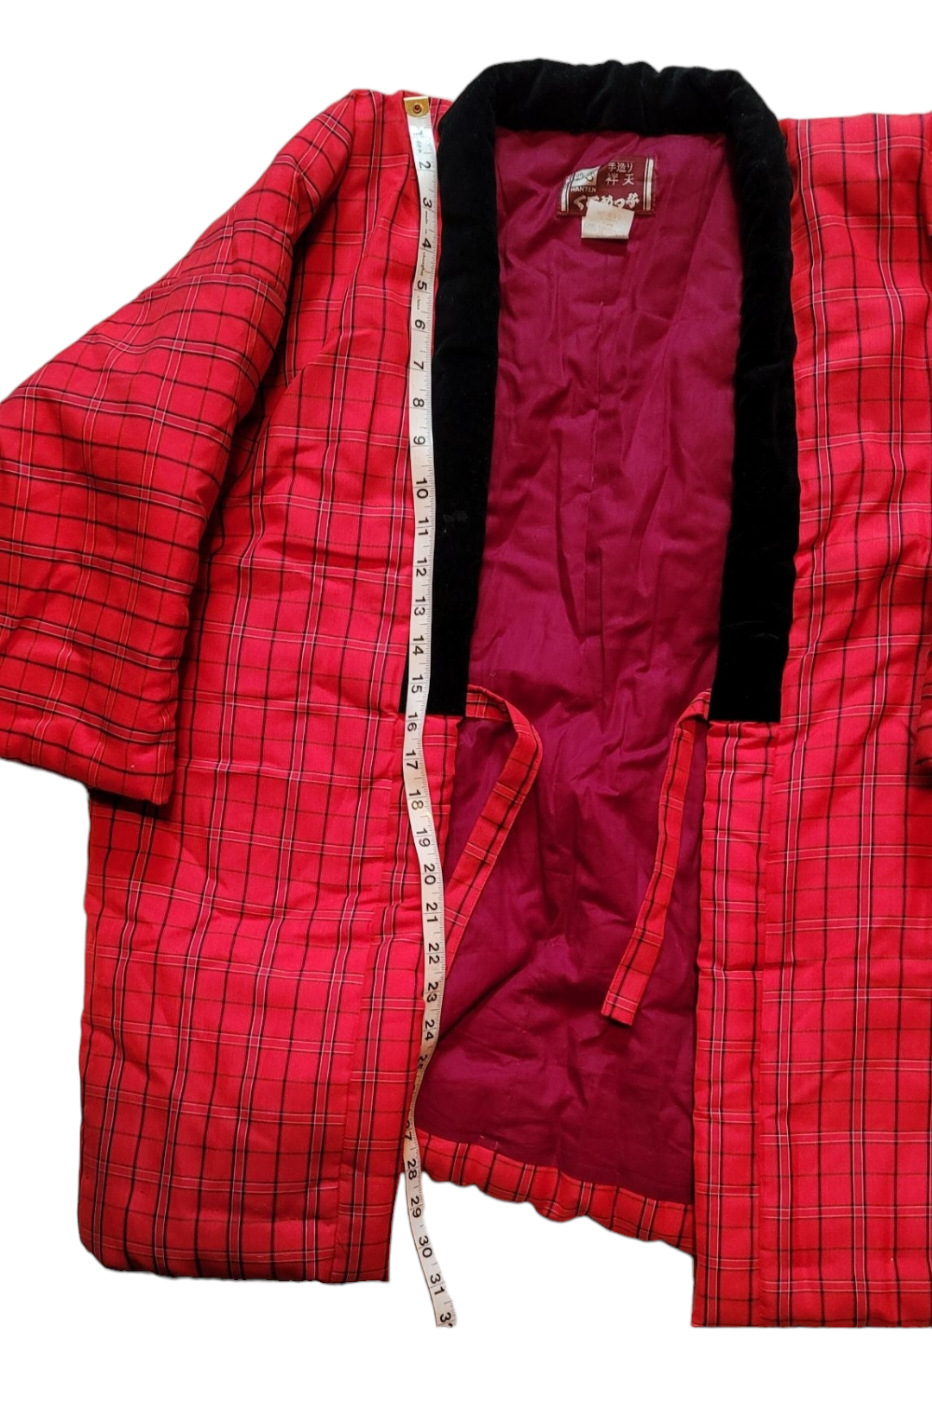 Vintage Korean short housecoat or robe